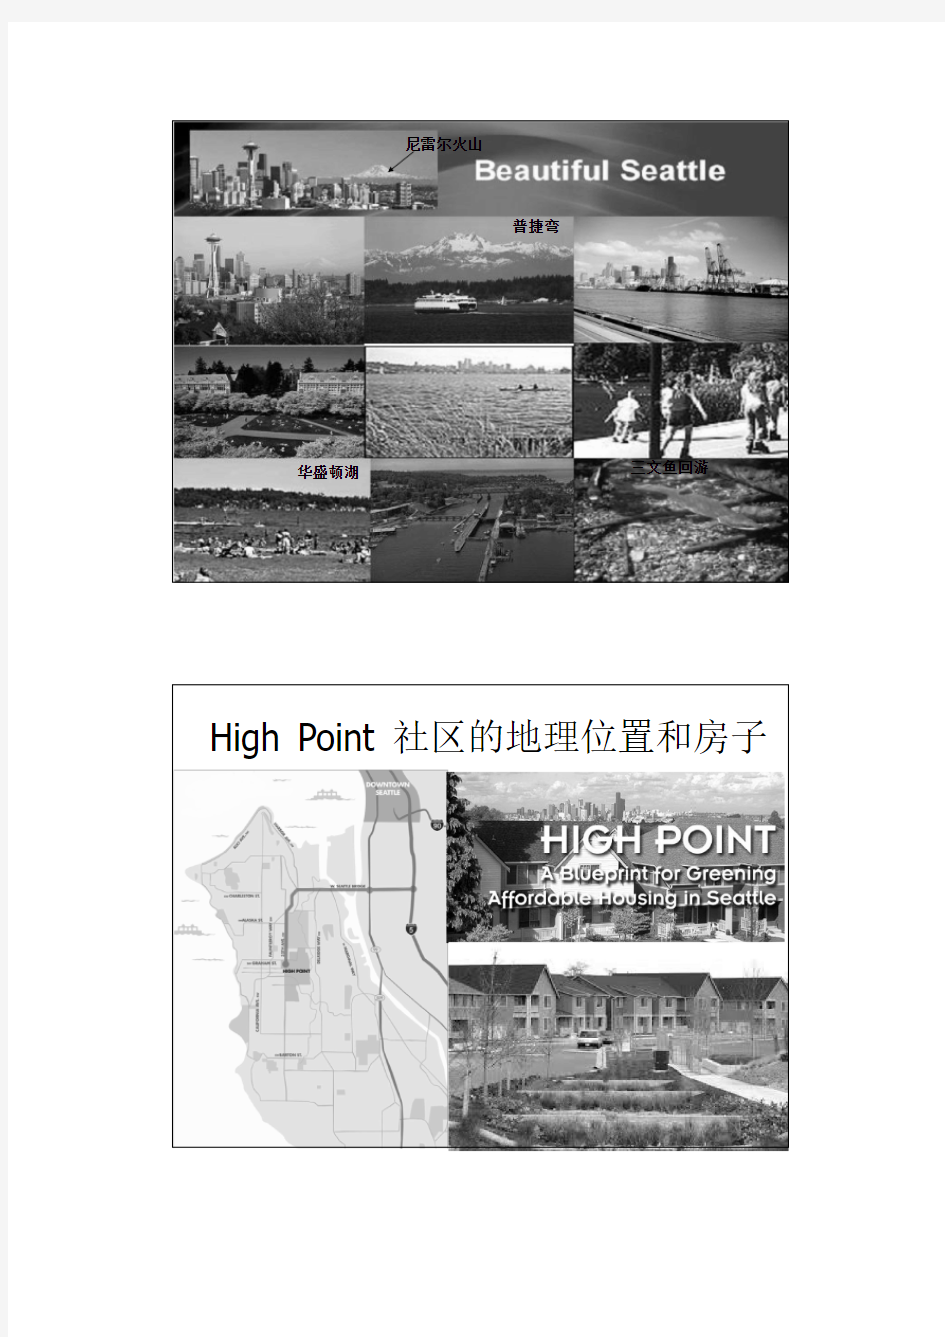 High Point—一个绿色雨水设施实施成功的故事